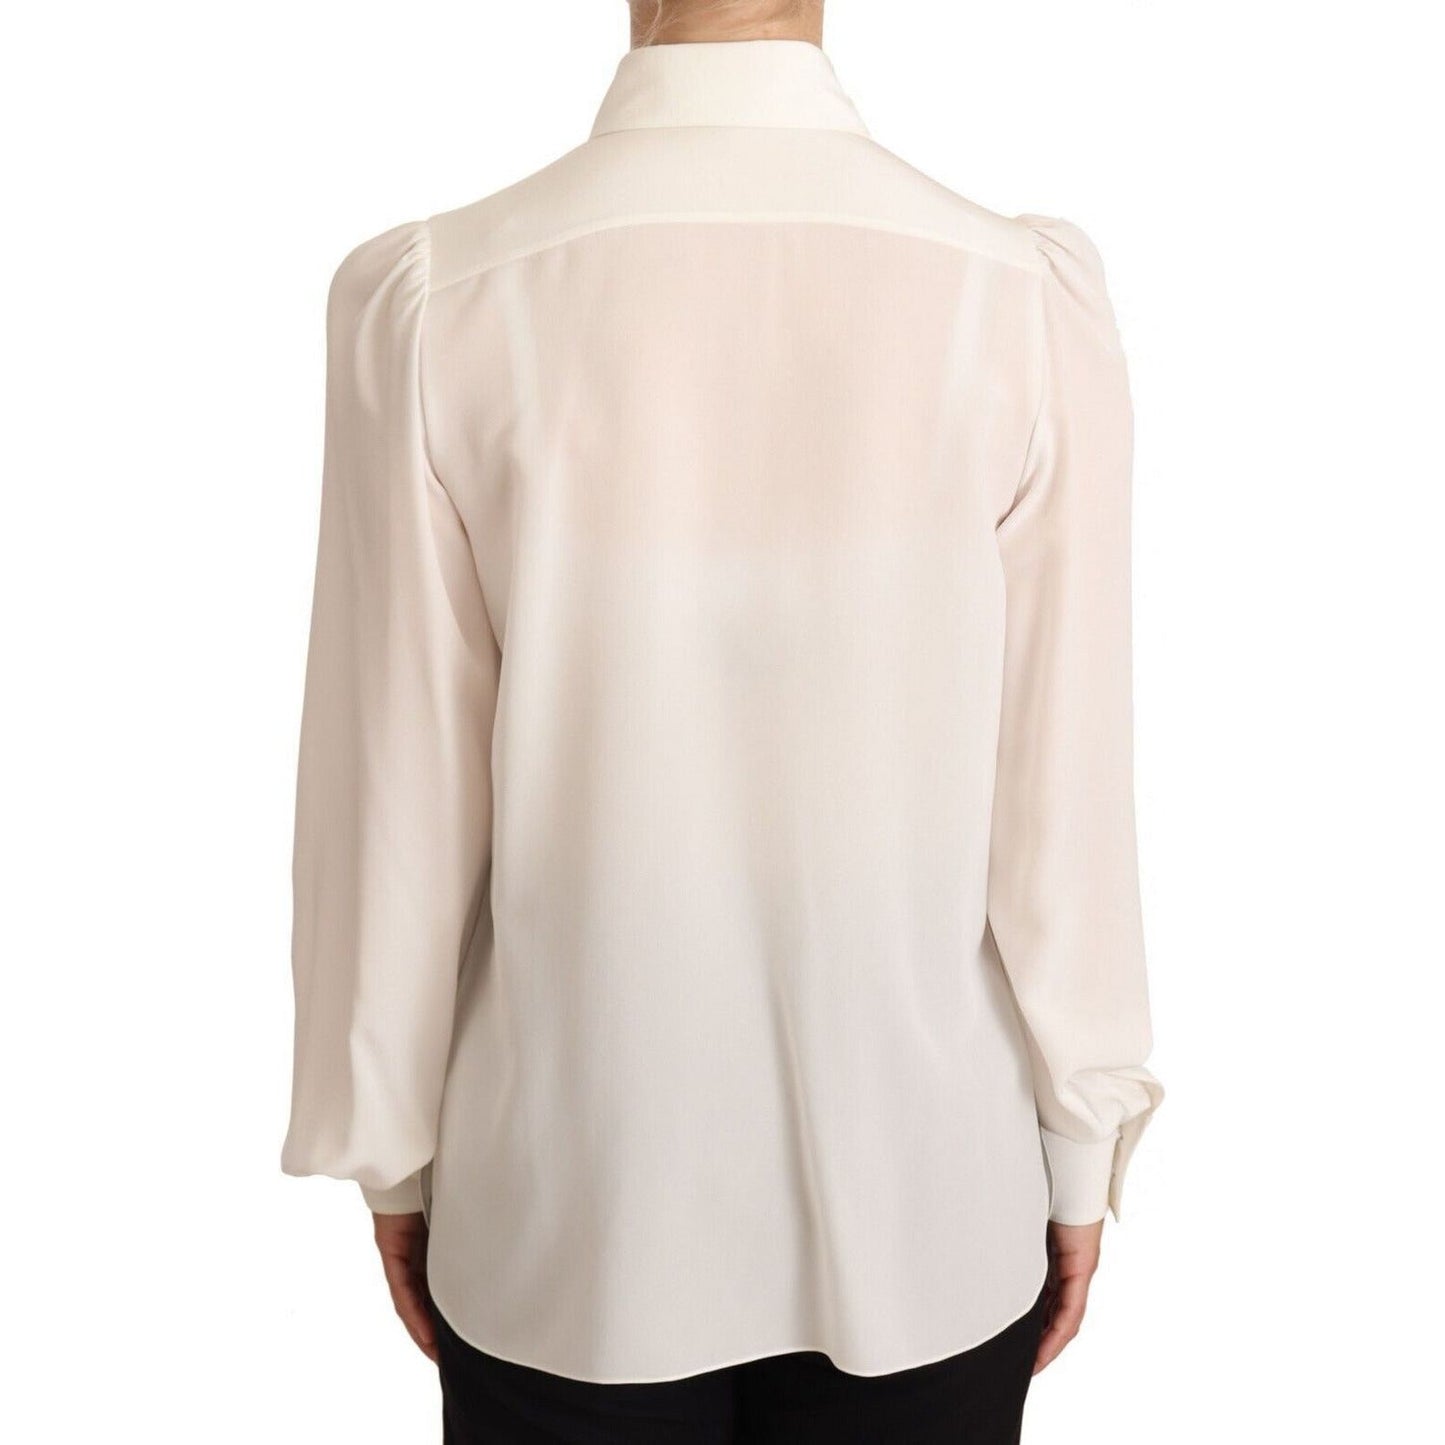 Dolce & Gabbana Elegant Silk Top in Off White white-long-sleeve-polo-shirt-top-blouse s-l1600-2-59-e260a7cb-bd0.jpg